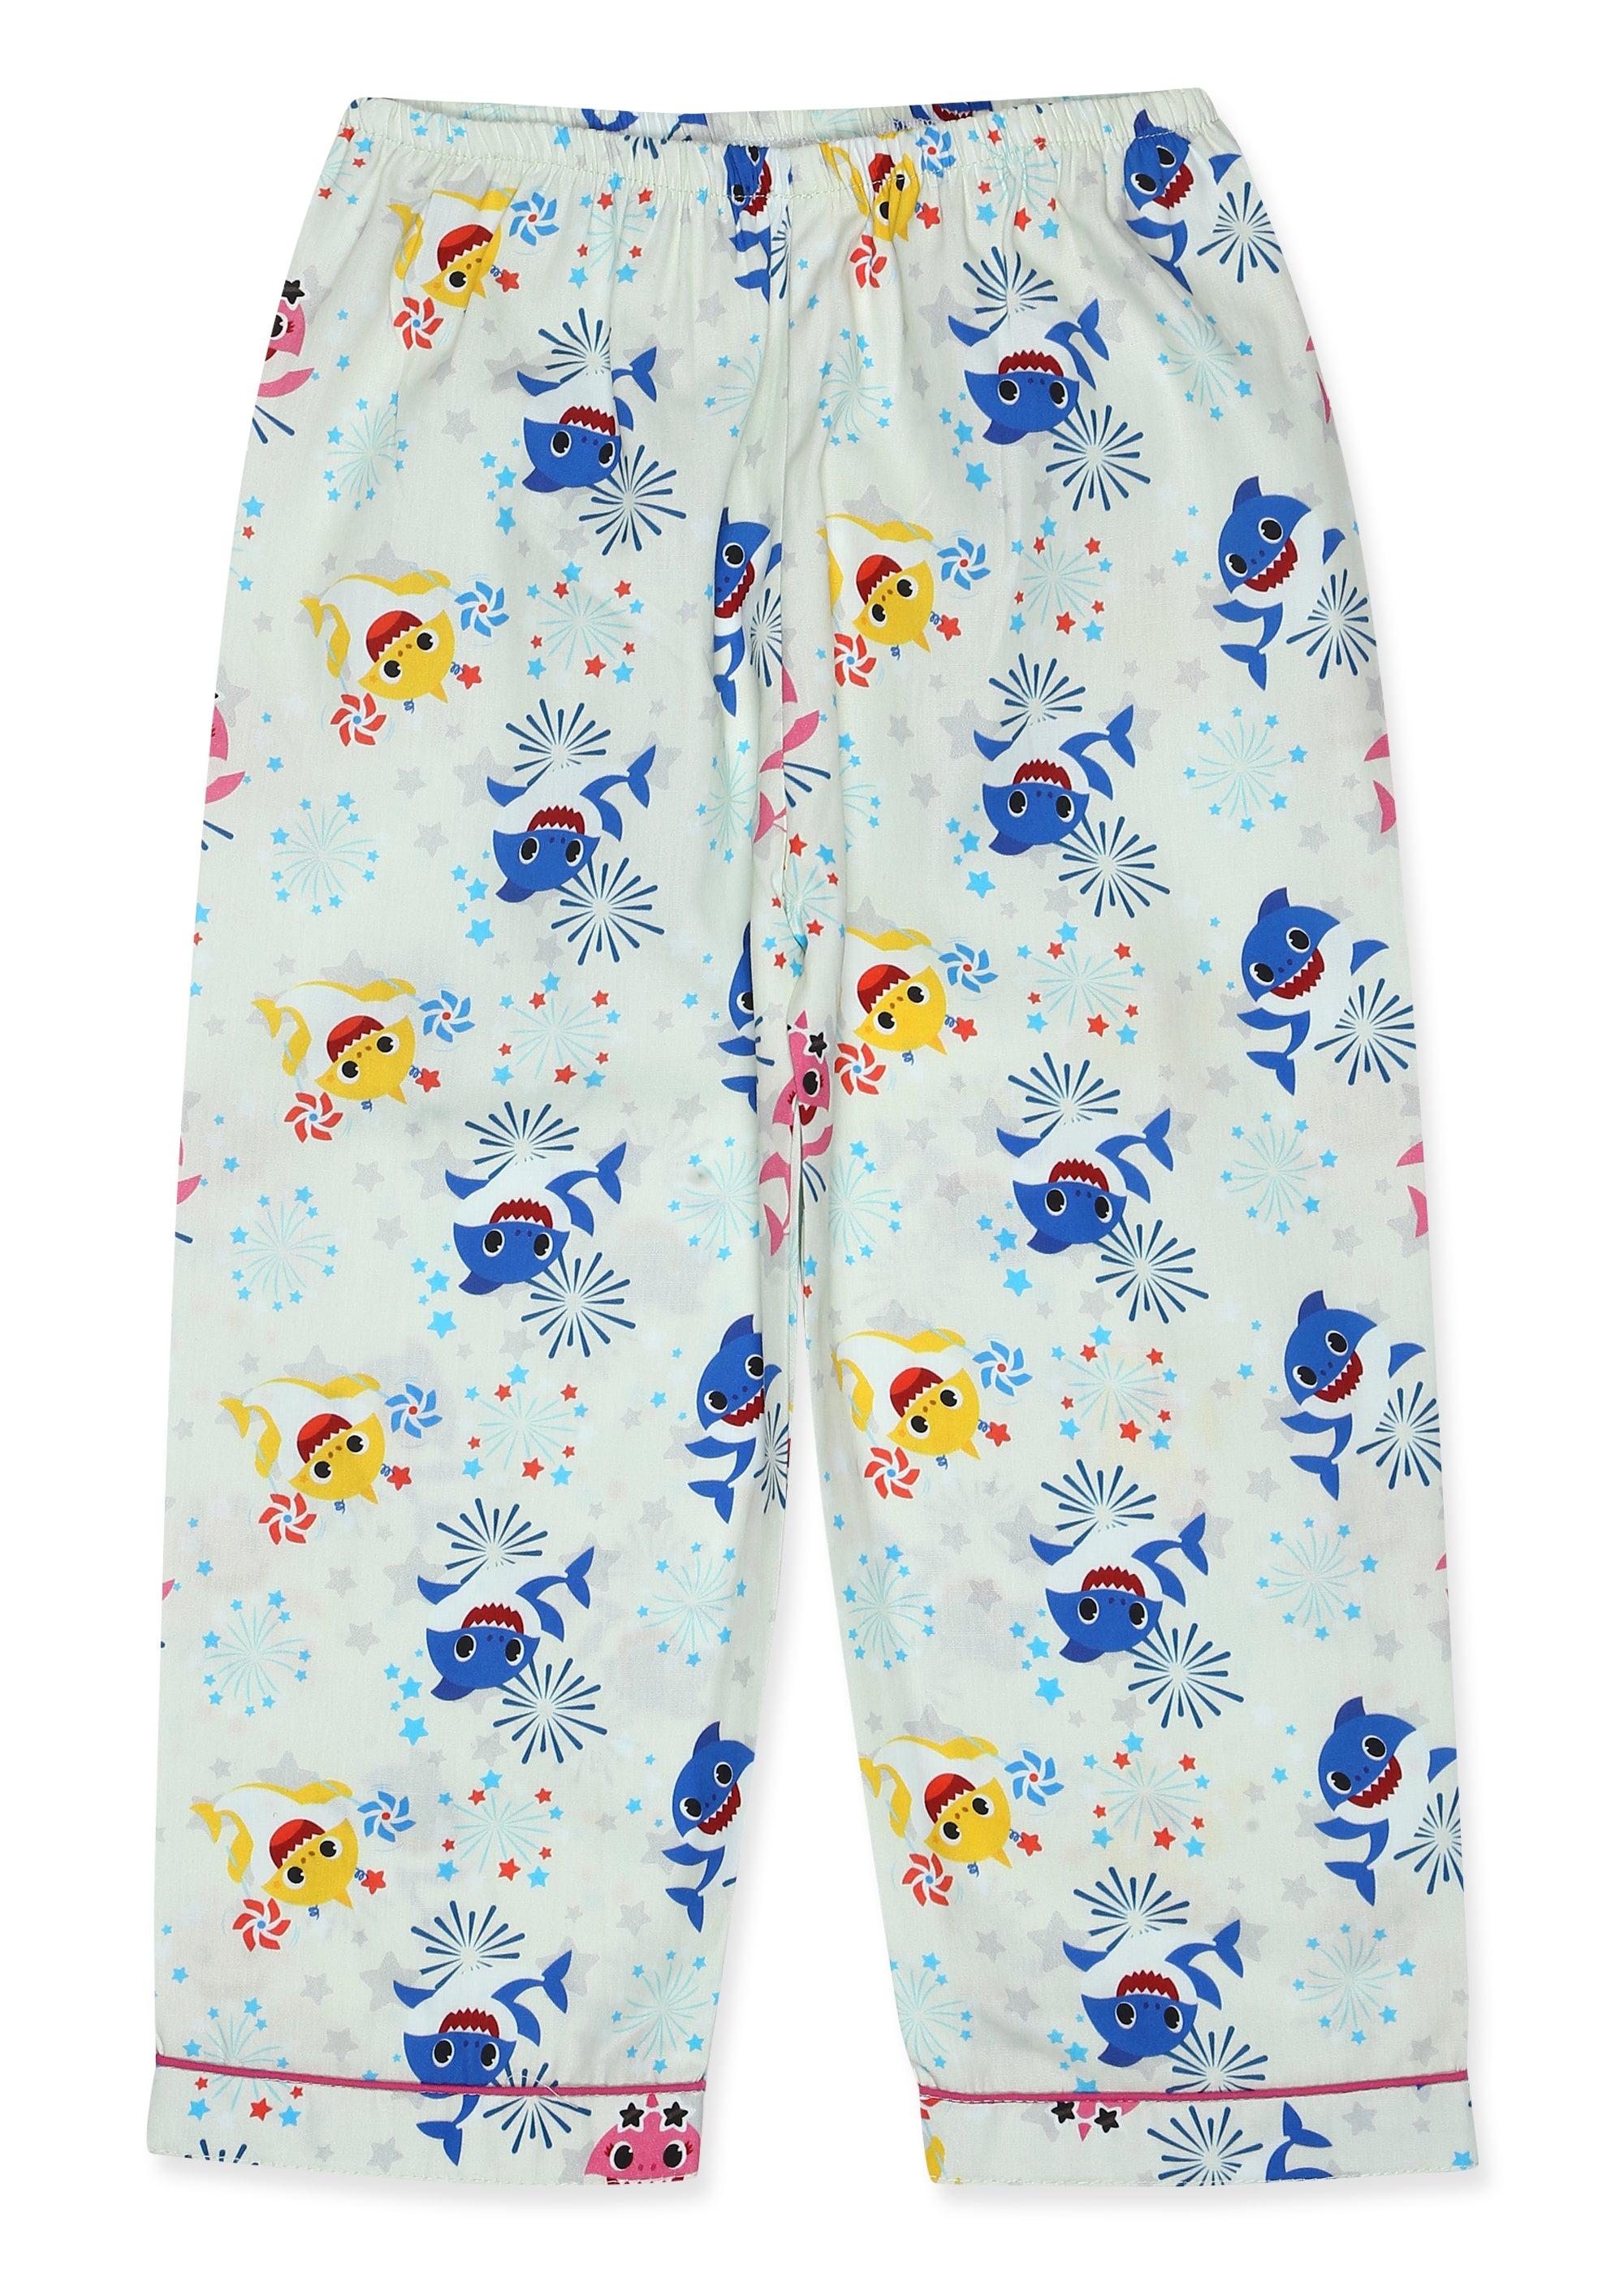 Stars and Sharks Forever Print Short Sleeve Kids Night Suit - Shopbloom